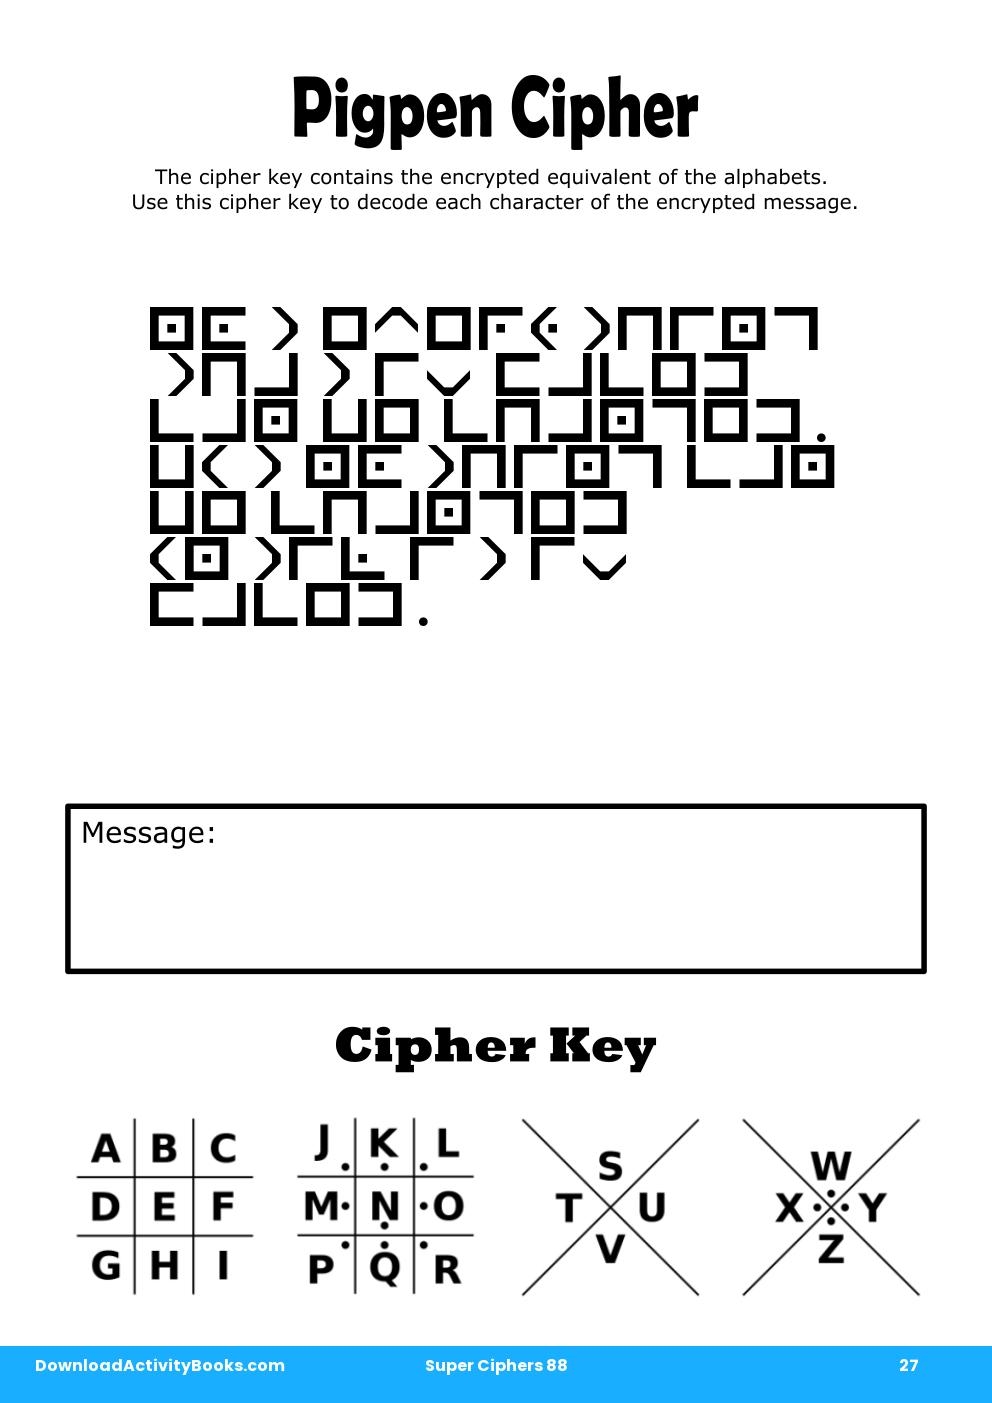 Pigpen Cipher in Super Ciphers 88